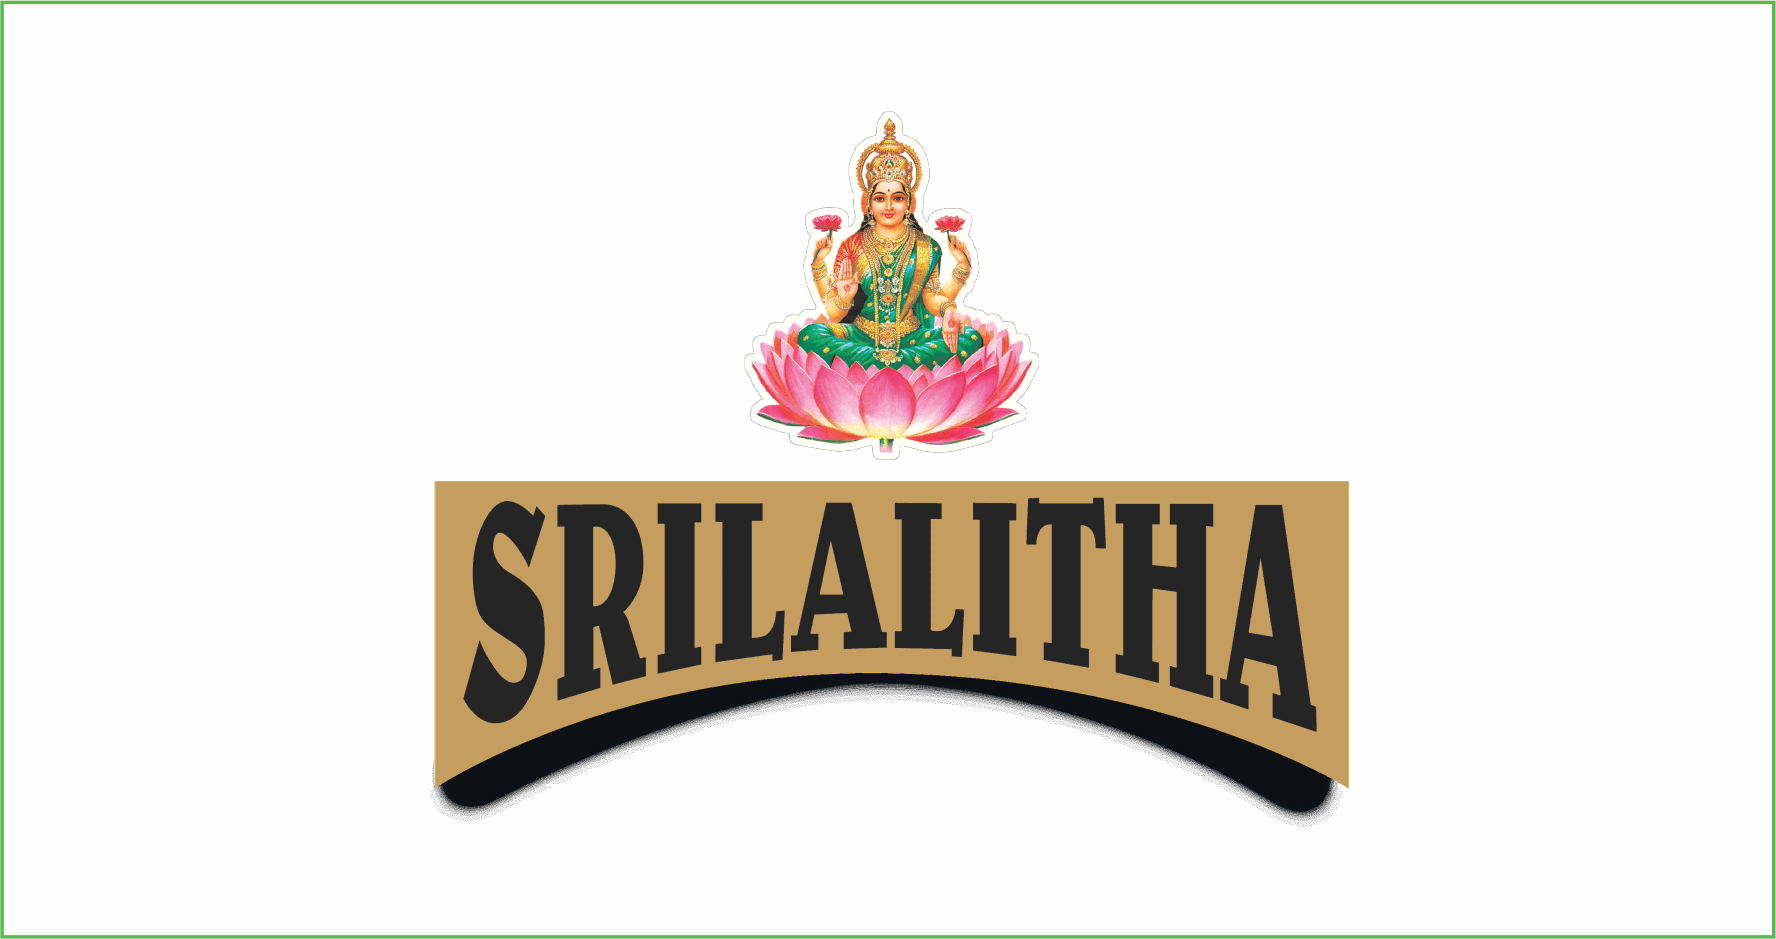 Srilalitha